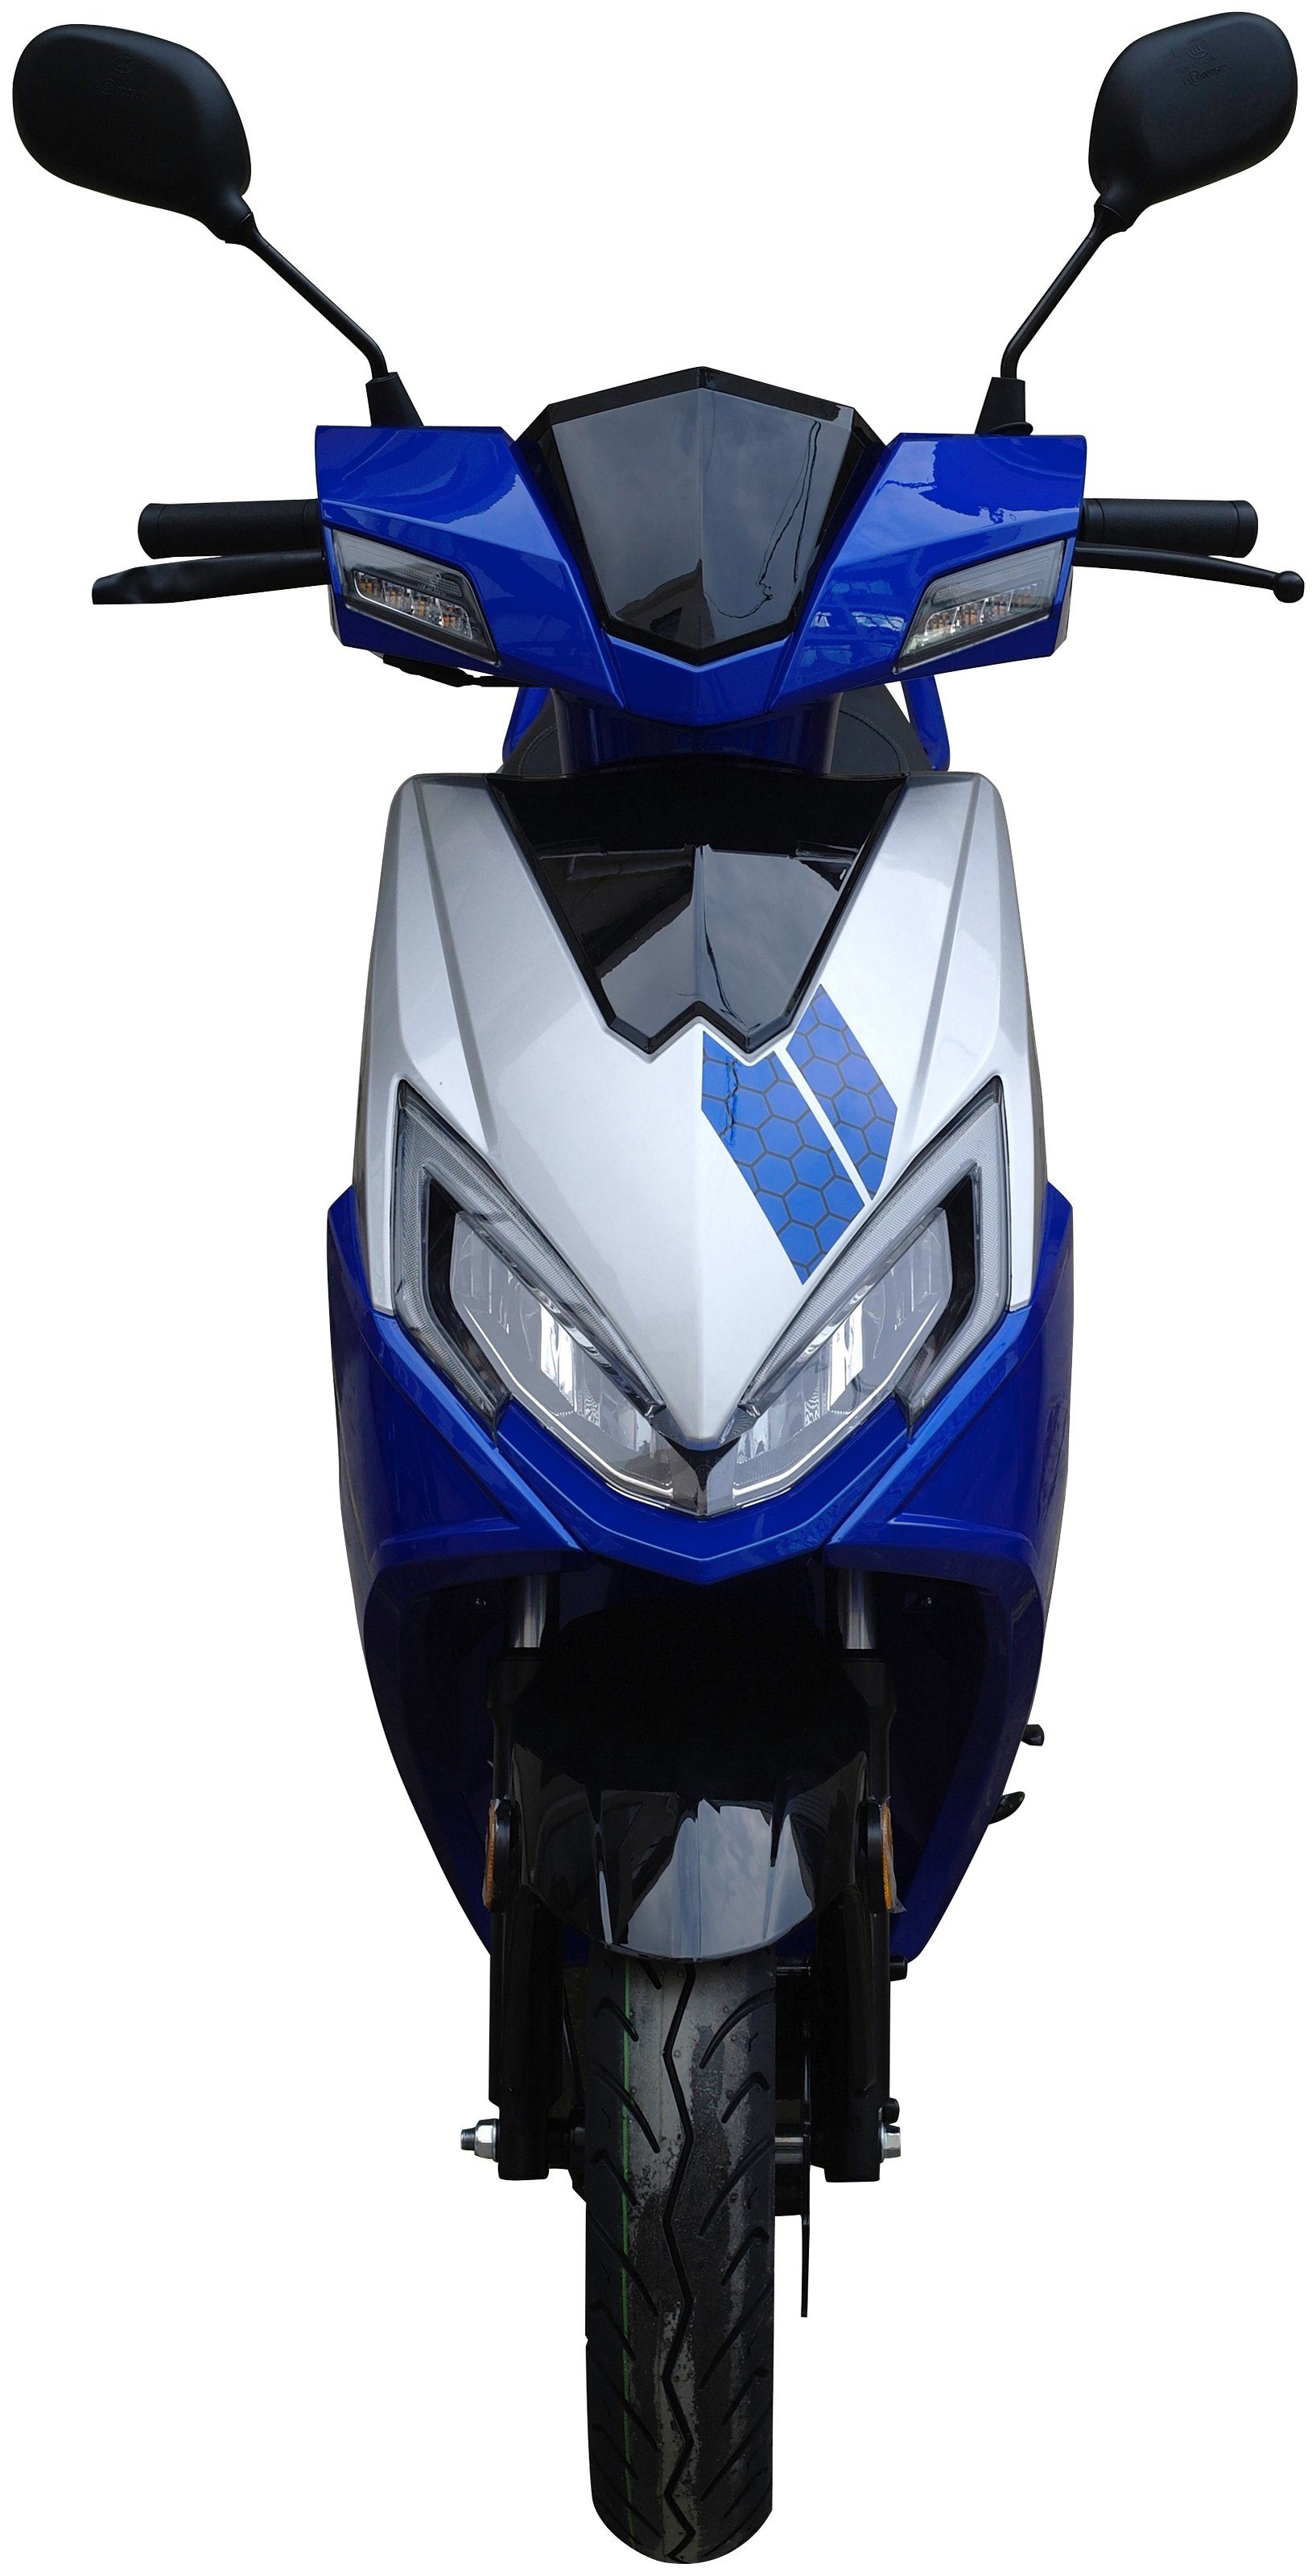 GT UNION Motorroller Sonic X 50-45, 50 ccm, 45 km/h, Euro 5